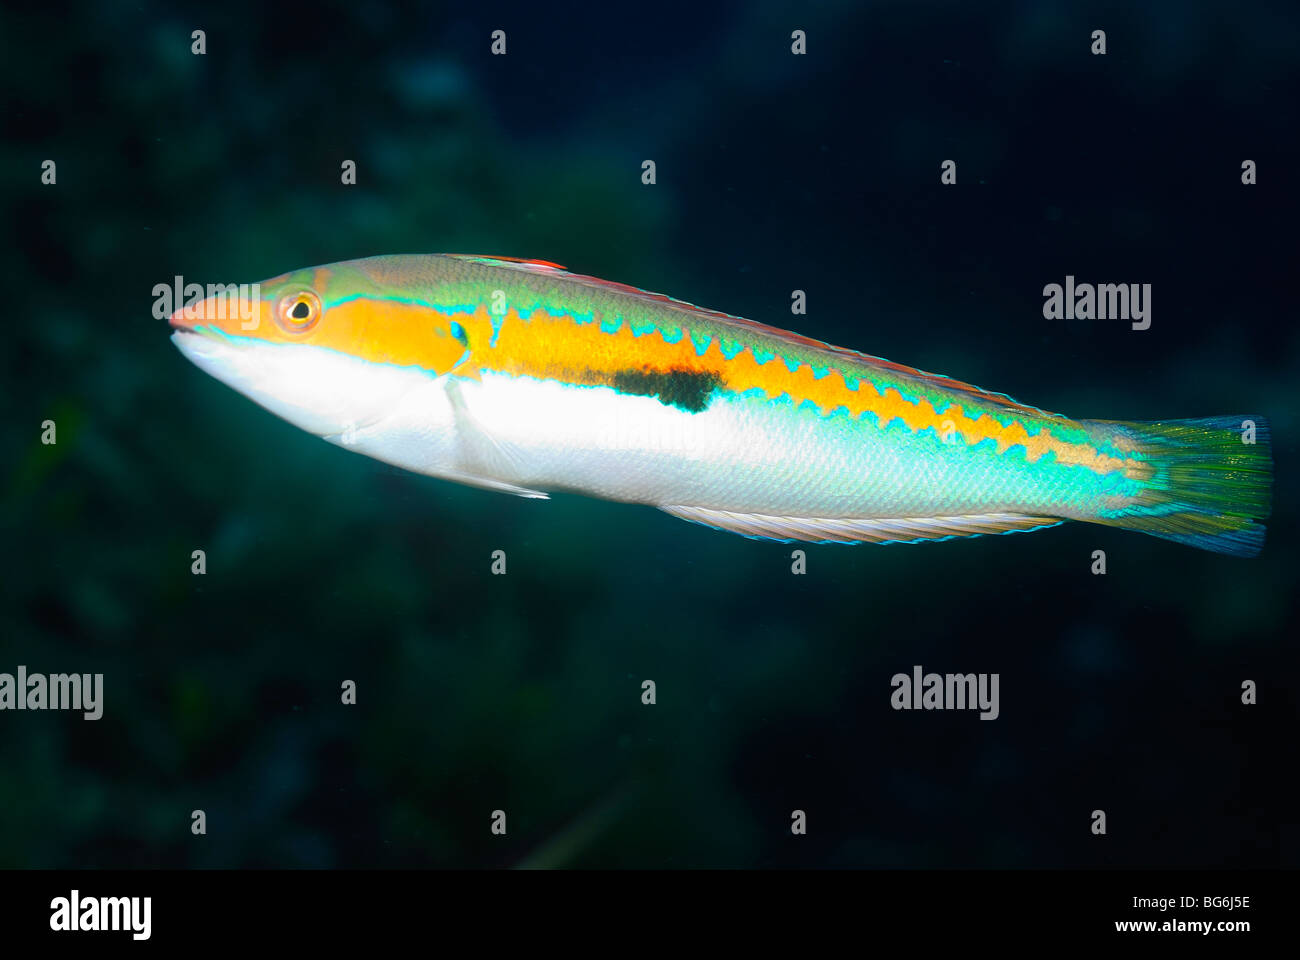 Mediterranean rainbow wrasse fish in the Mediterranean Sea, off Monaco Stock Photo